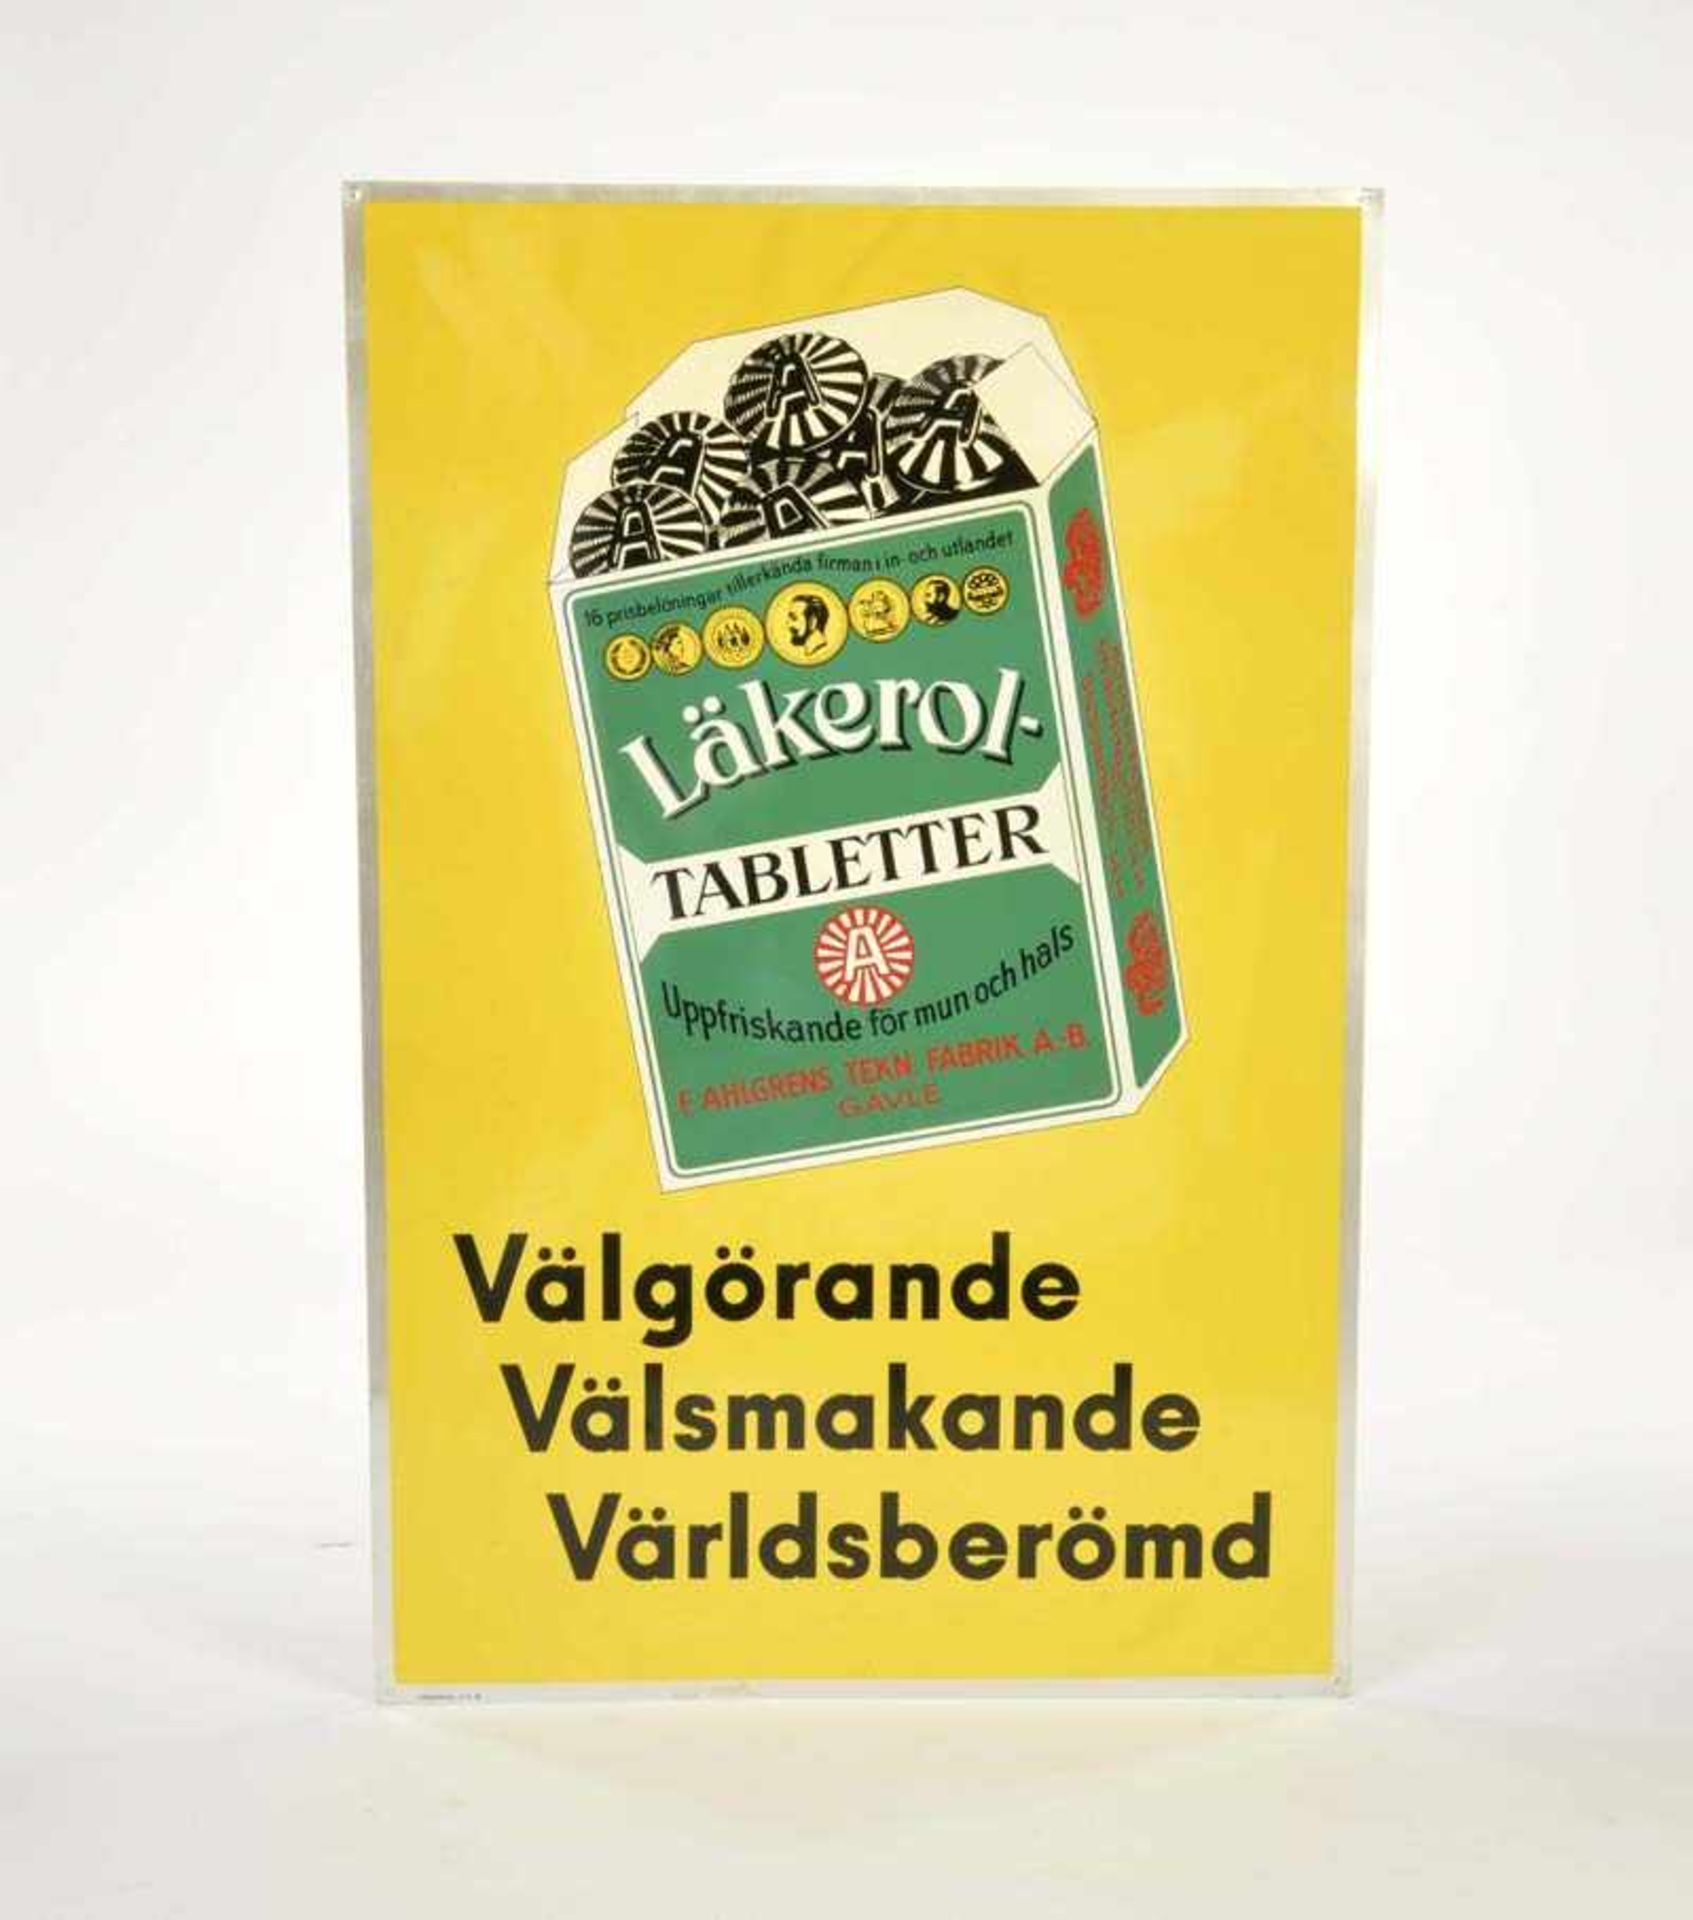 Tin Plate Sign "Läkerol Tabletten", Sweden, from 1959, C 1Blechschild "Läkerol Tabletten", Sweden,